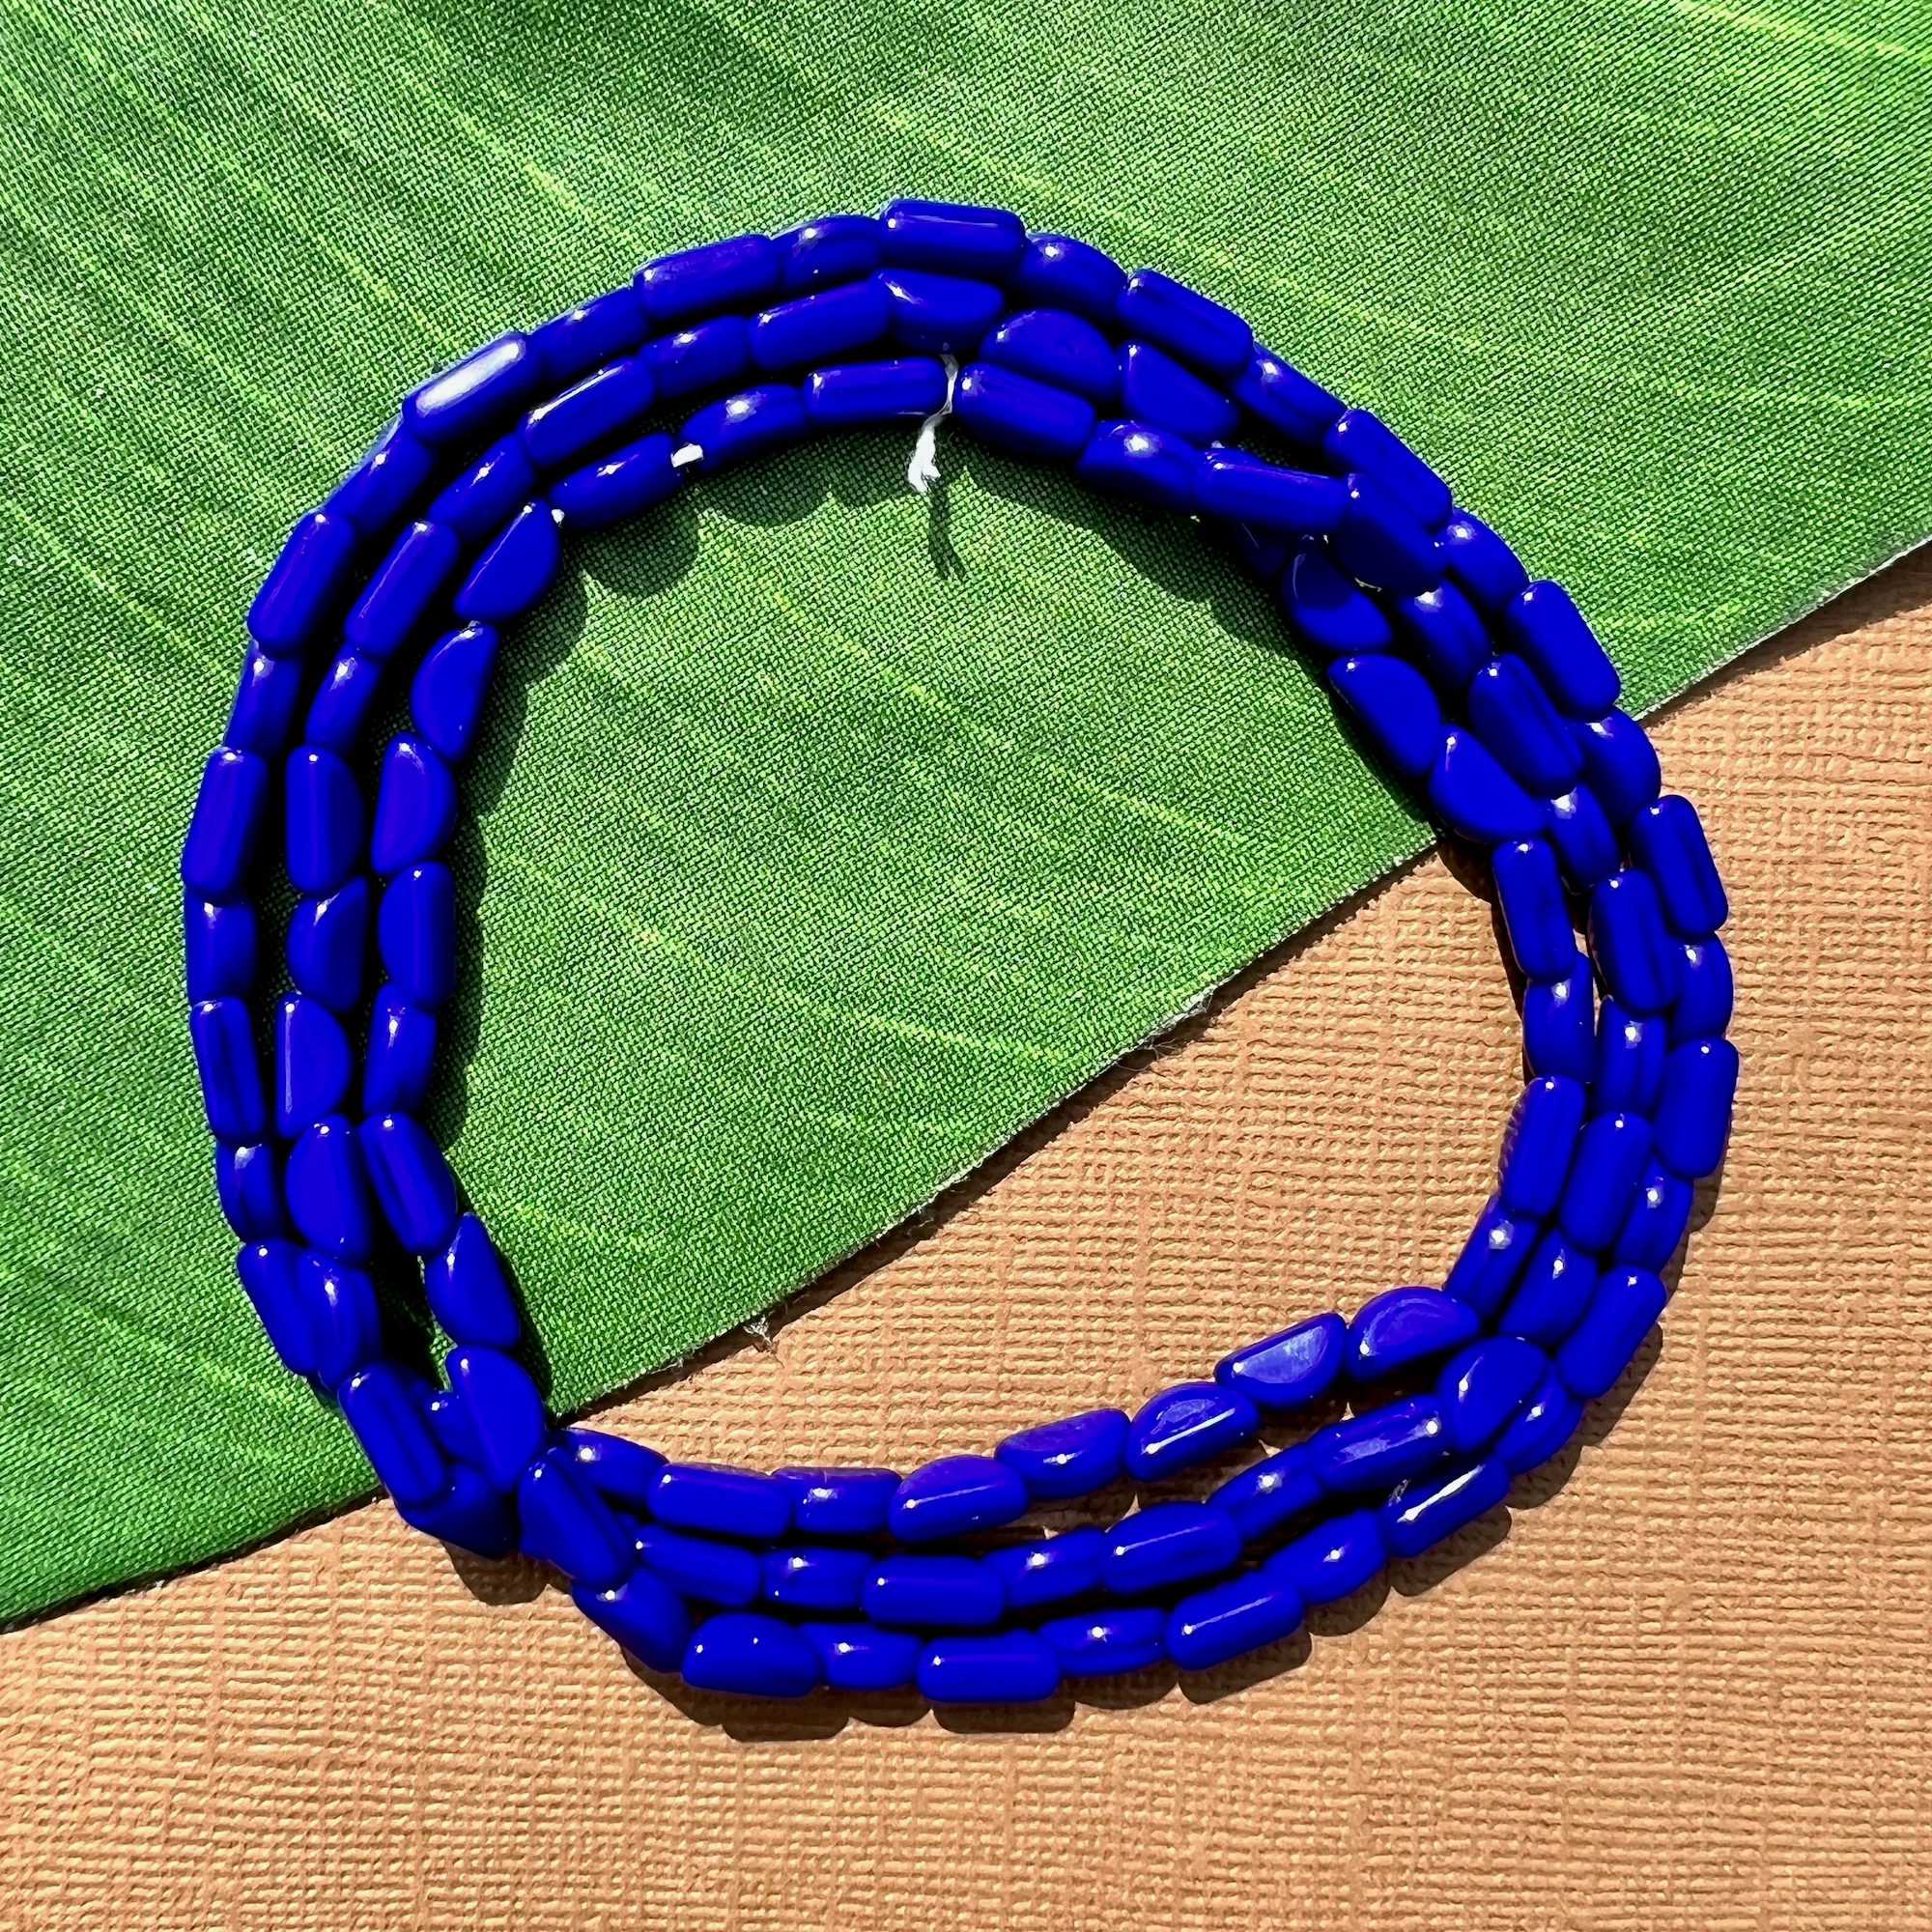 Blue Half Circle Beads - 100 Pieces